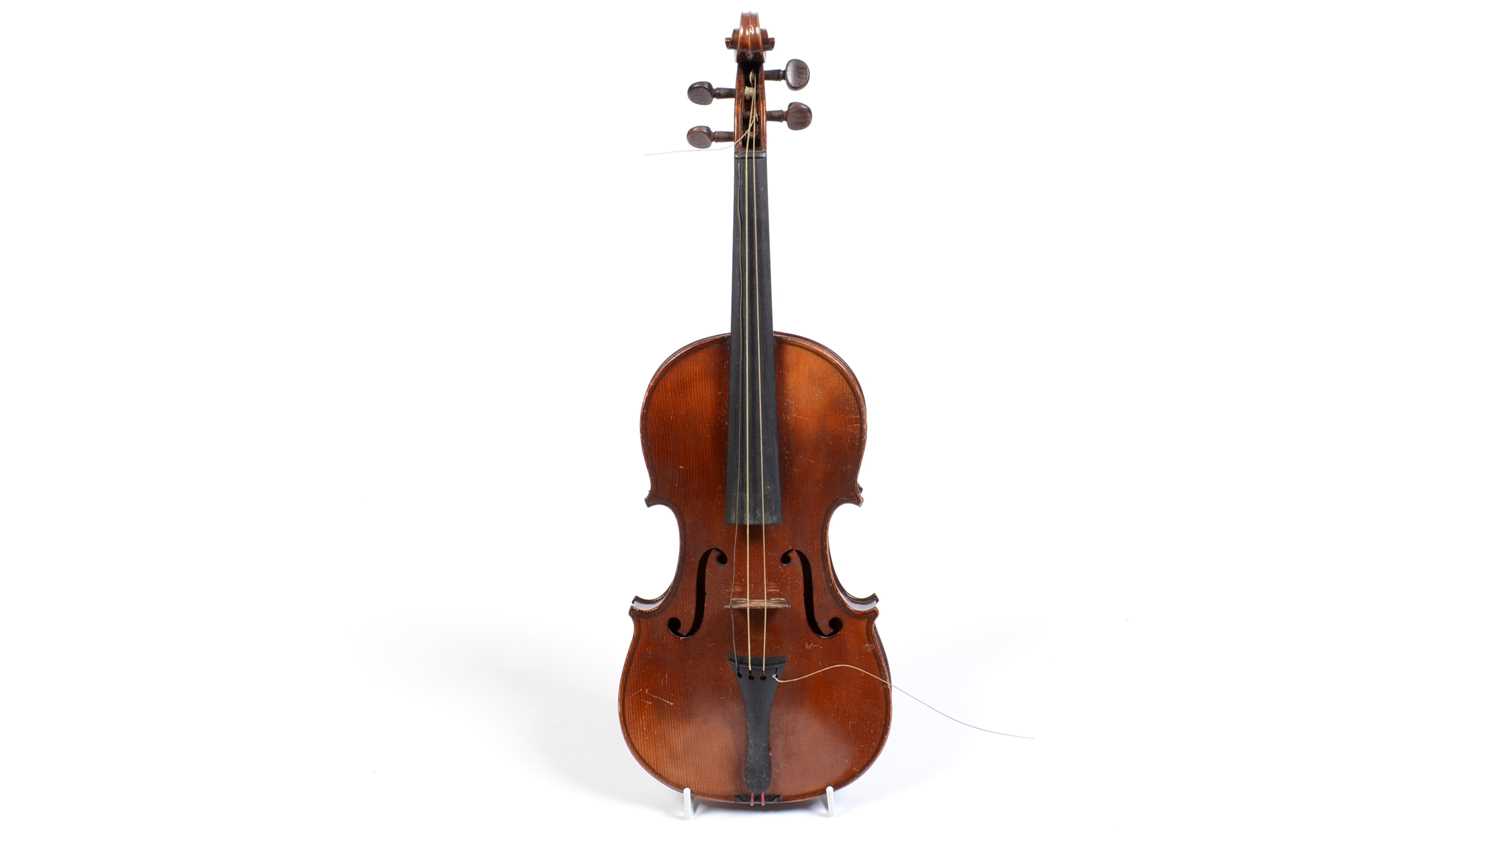 Lot 54 - A German 3/4 size violin